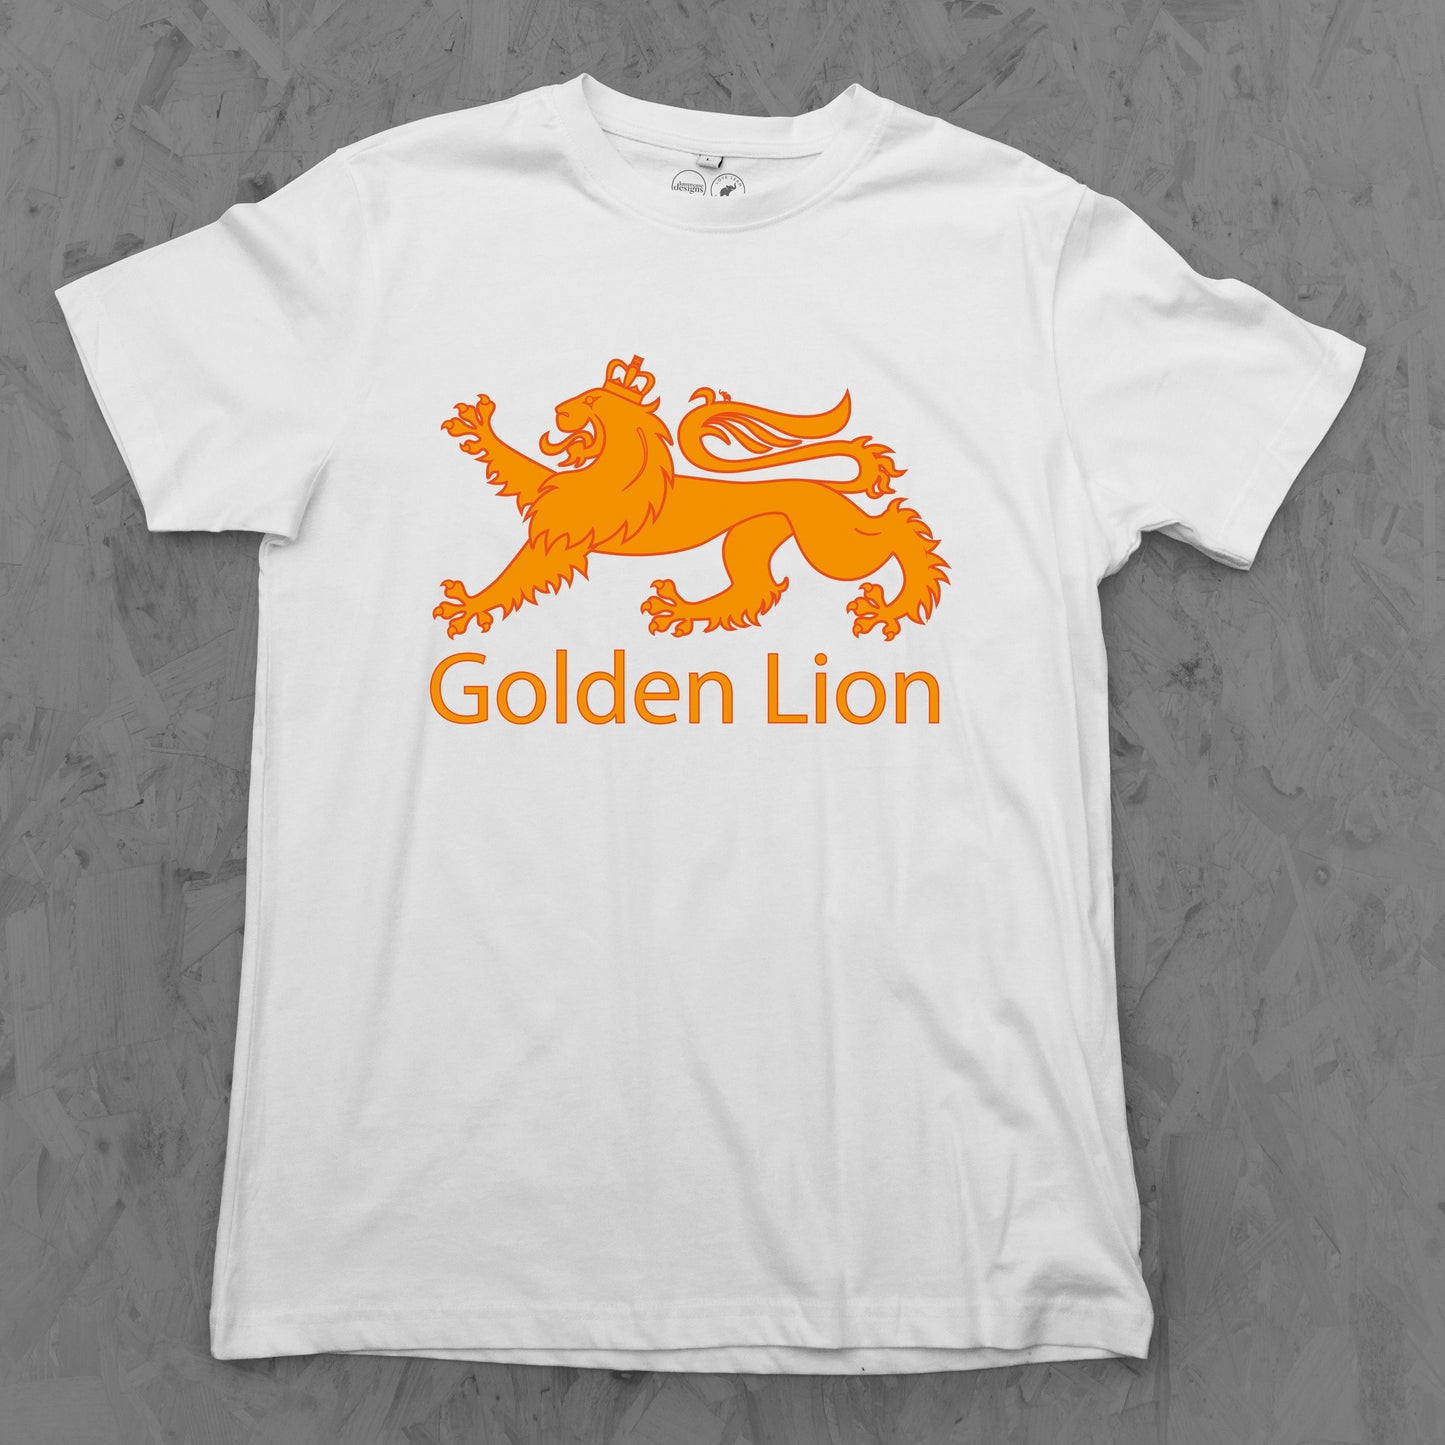 Golden Lion Tee Child's sizes 3-14 years